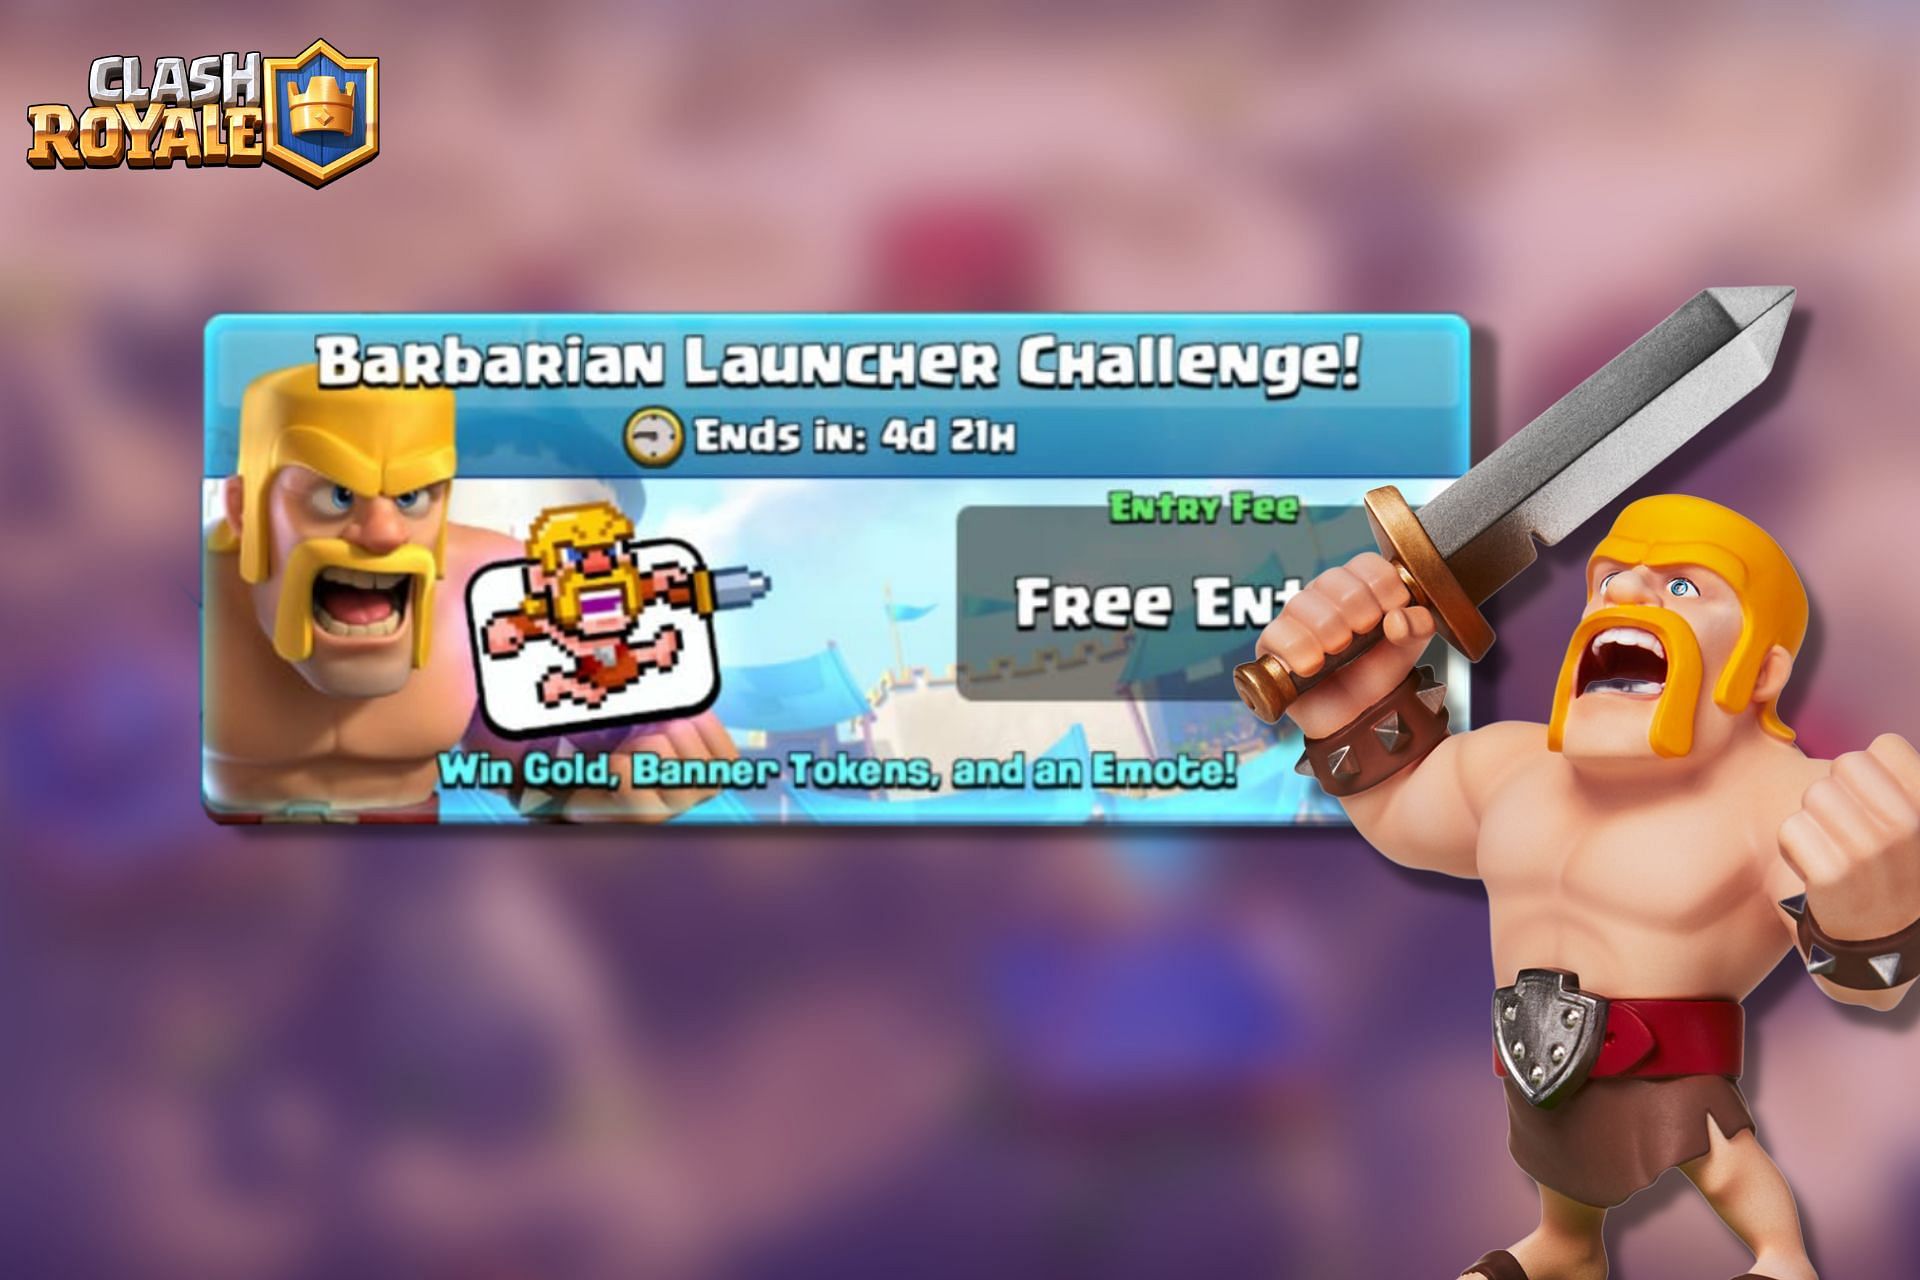 Barbarian Launcher Challenge in Clash Royale (Image via Sportskeeda)